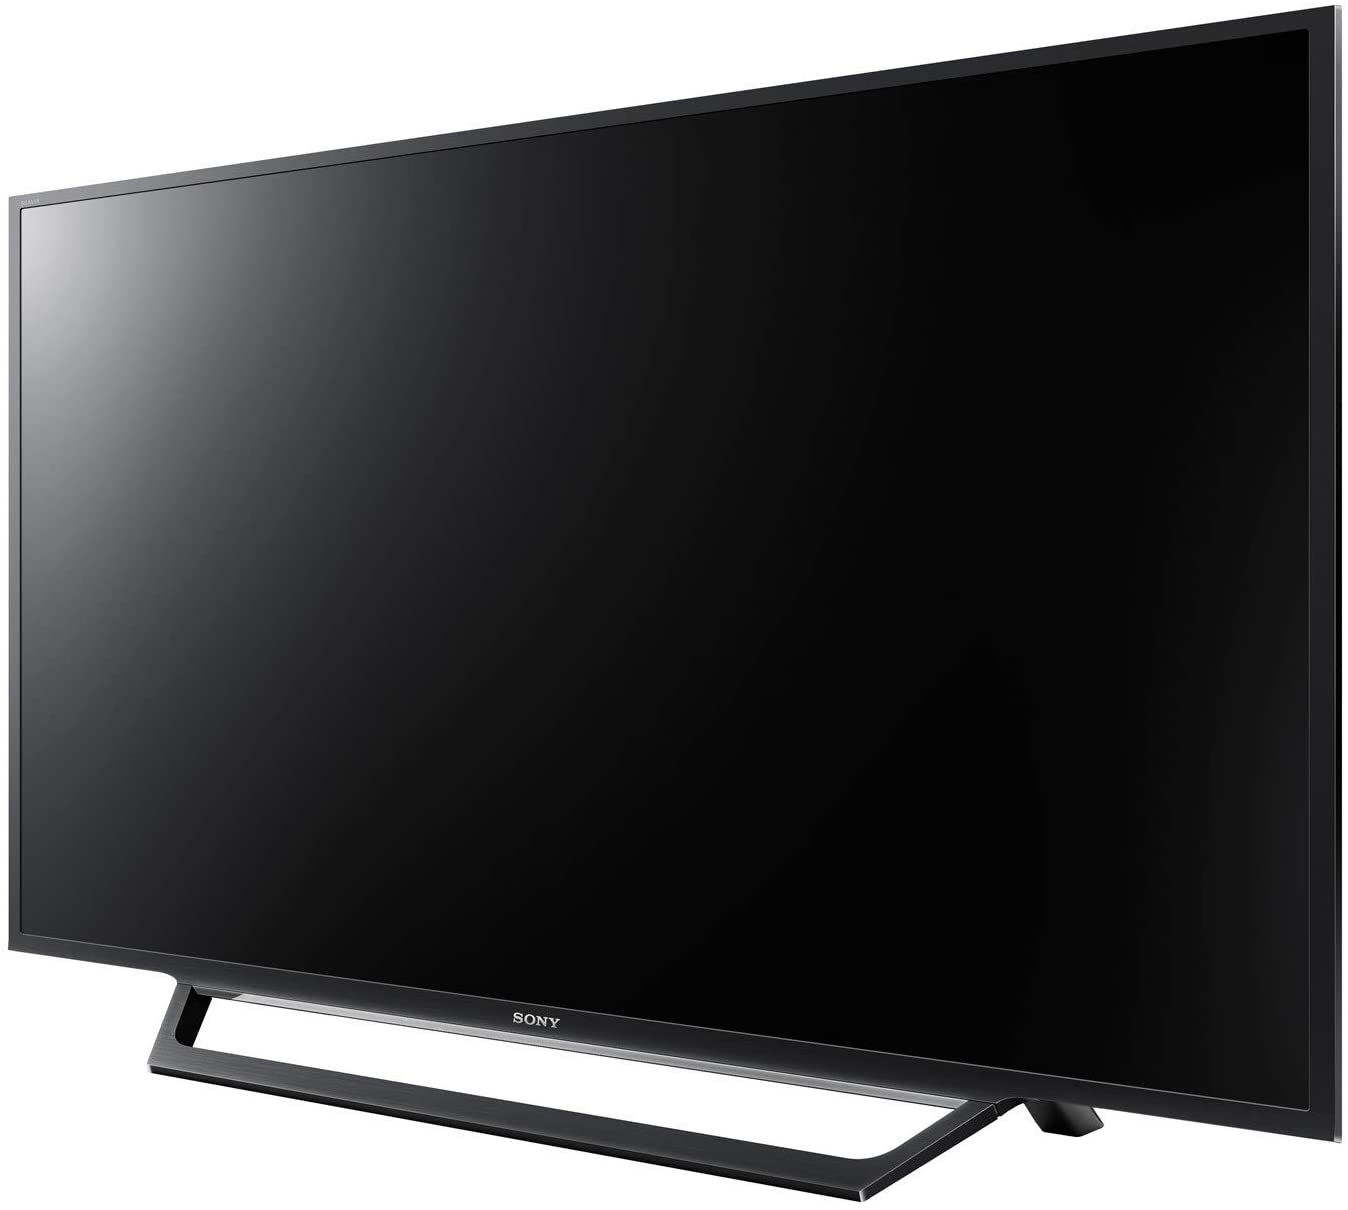 Sony 32 Inch Smart Digital LED TV (KDL32W600D)3